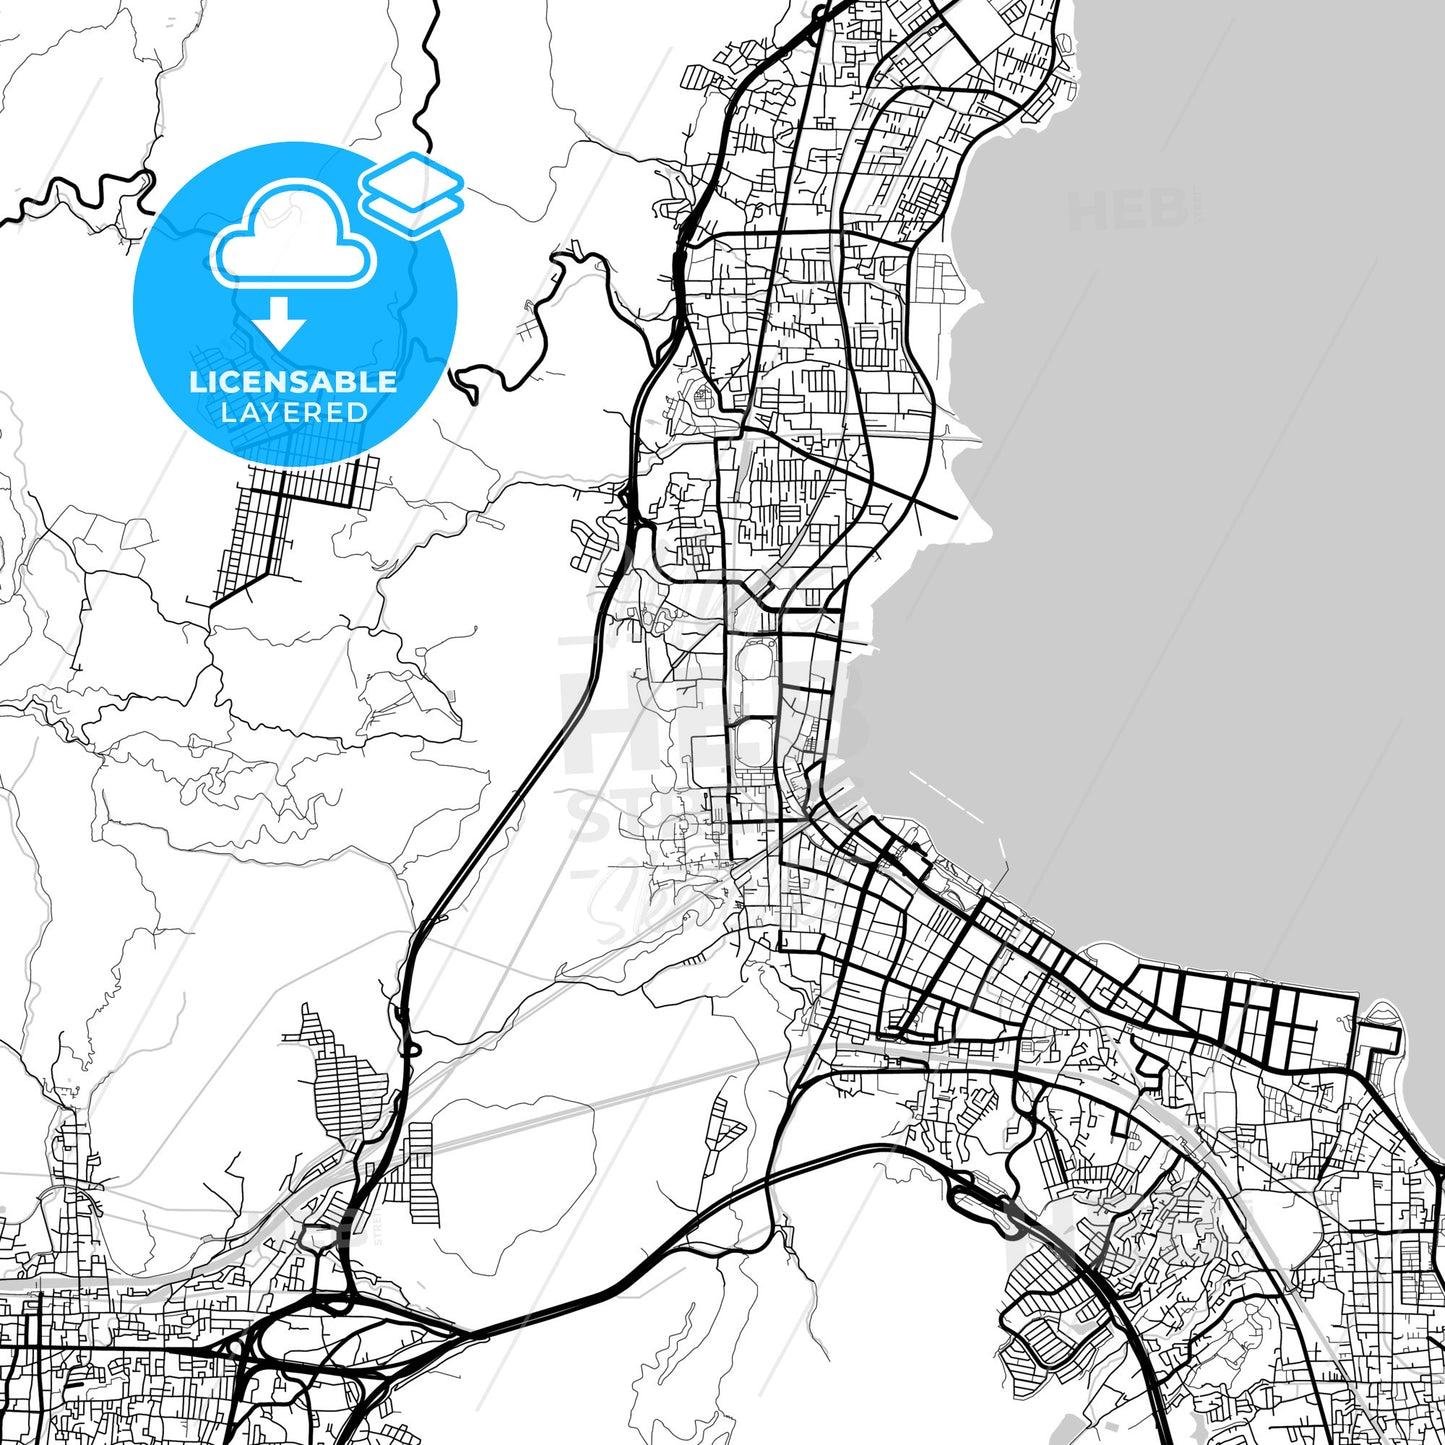 Layered PDF map of Ōtsu, Shiga, Japan